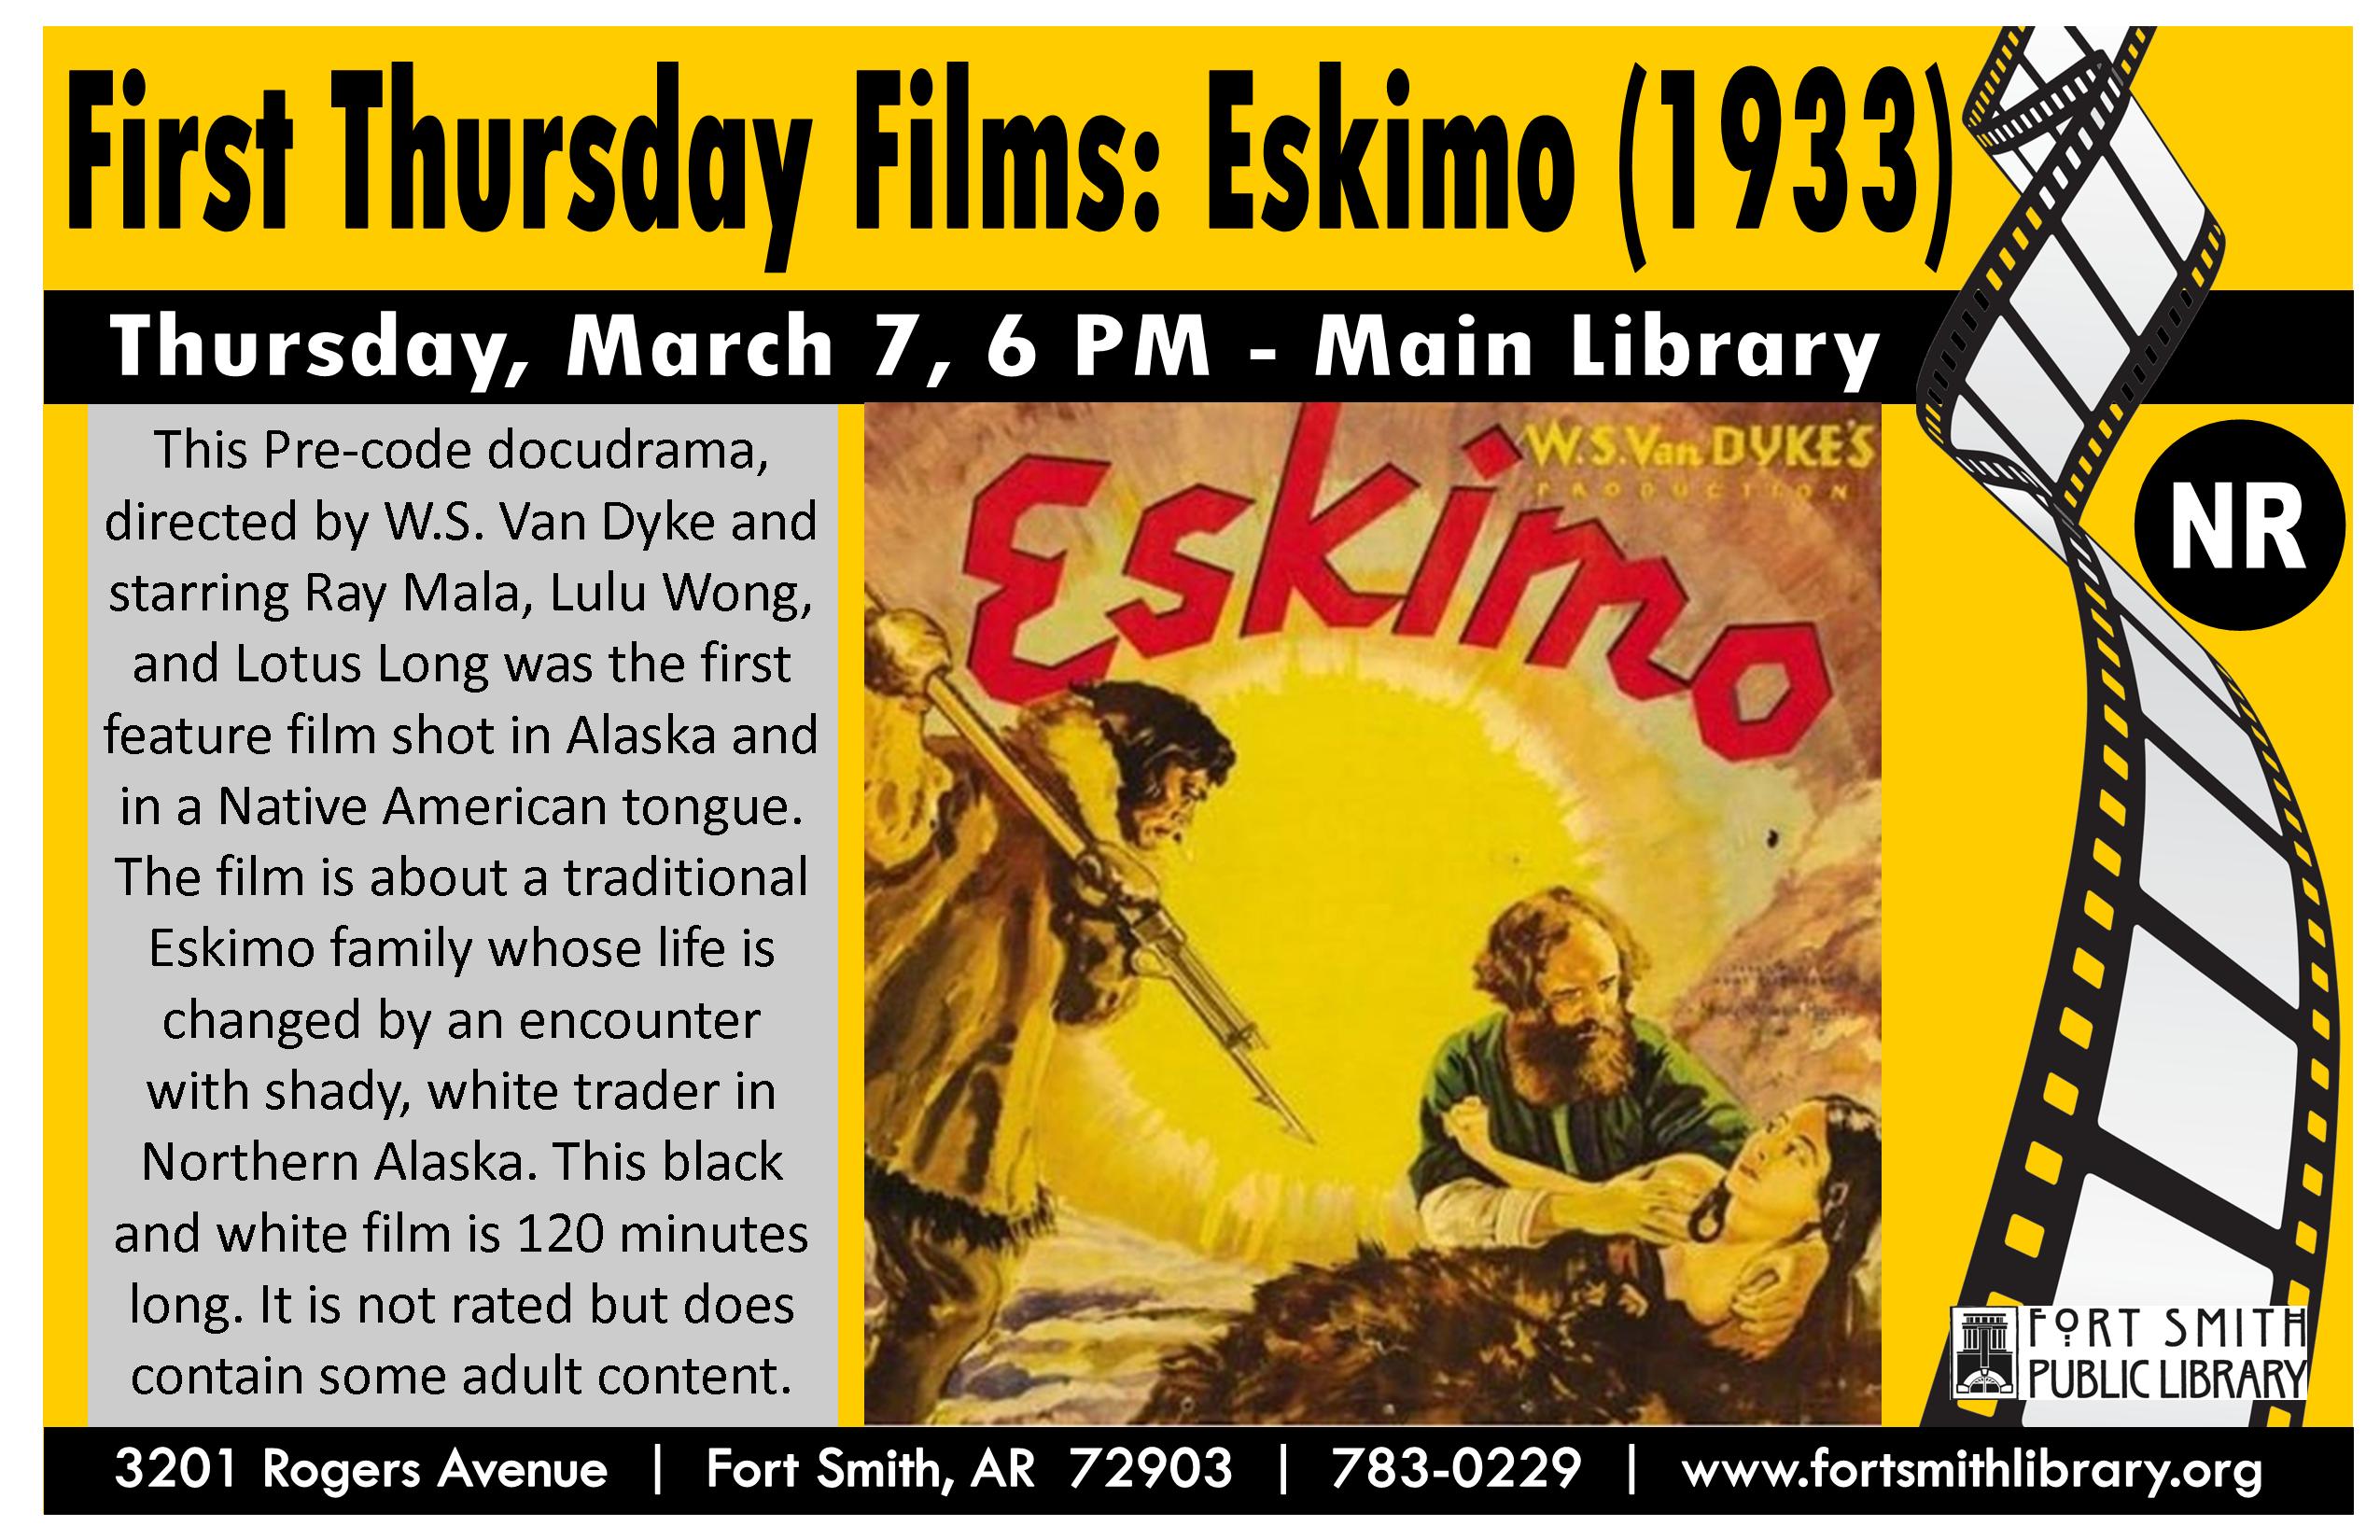 Eskimo (1933) film event poster